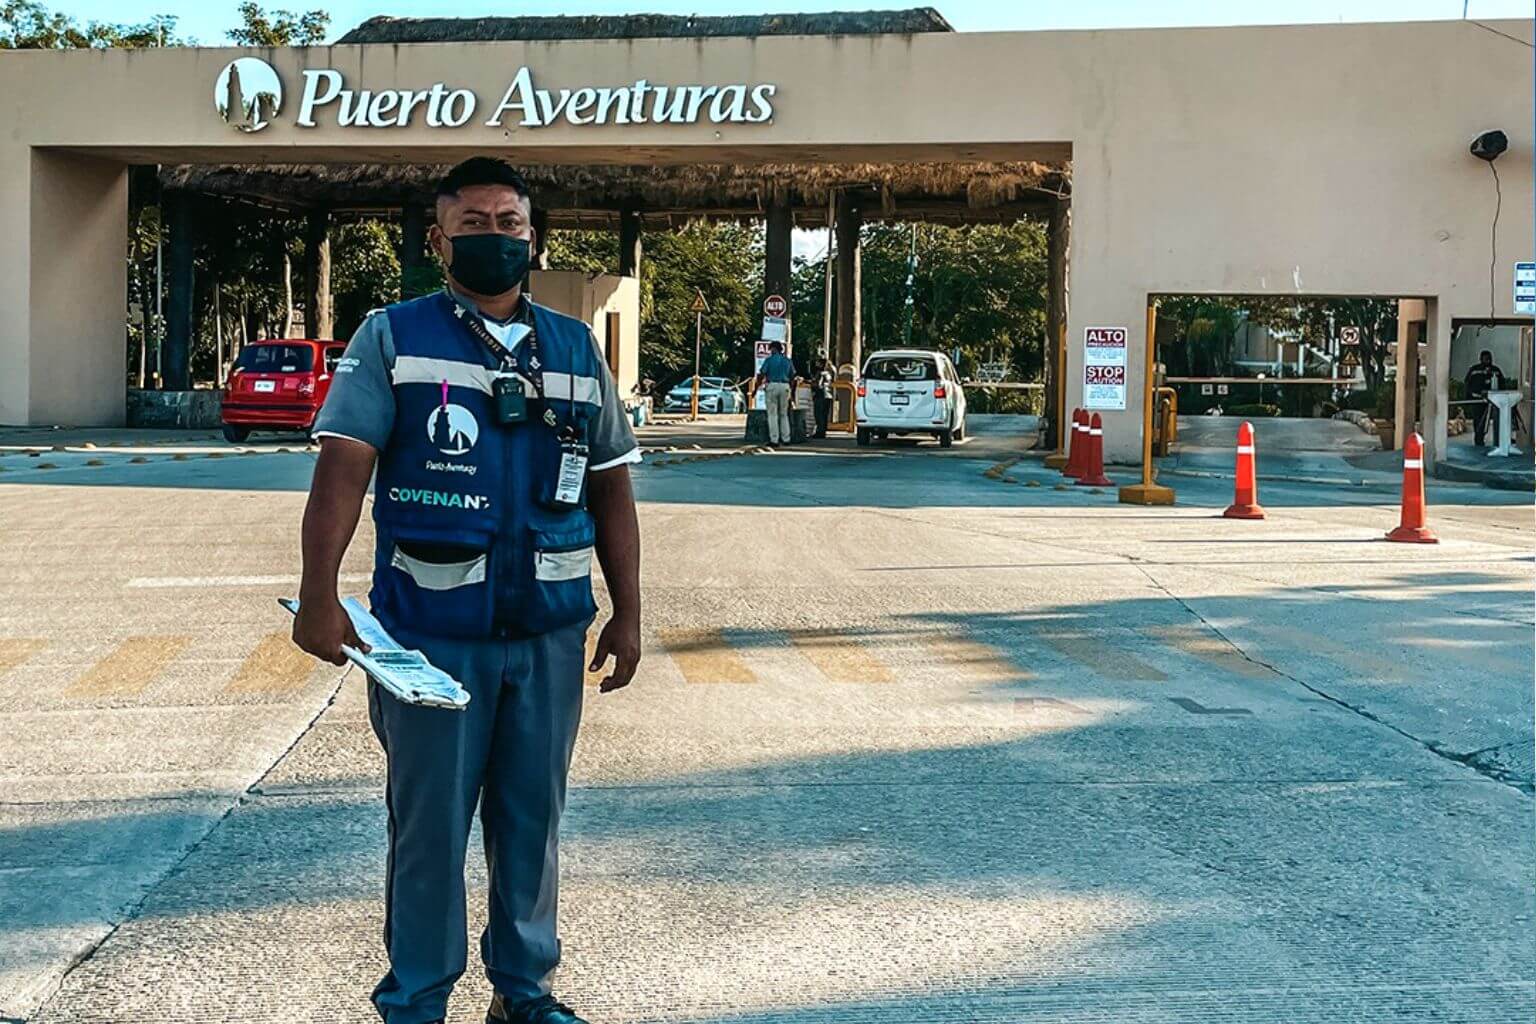 Puerto Aventuras safe gated community